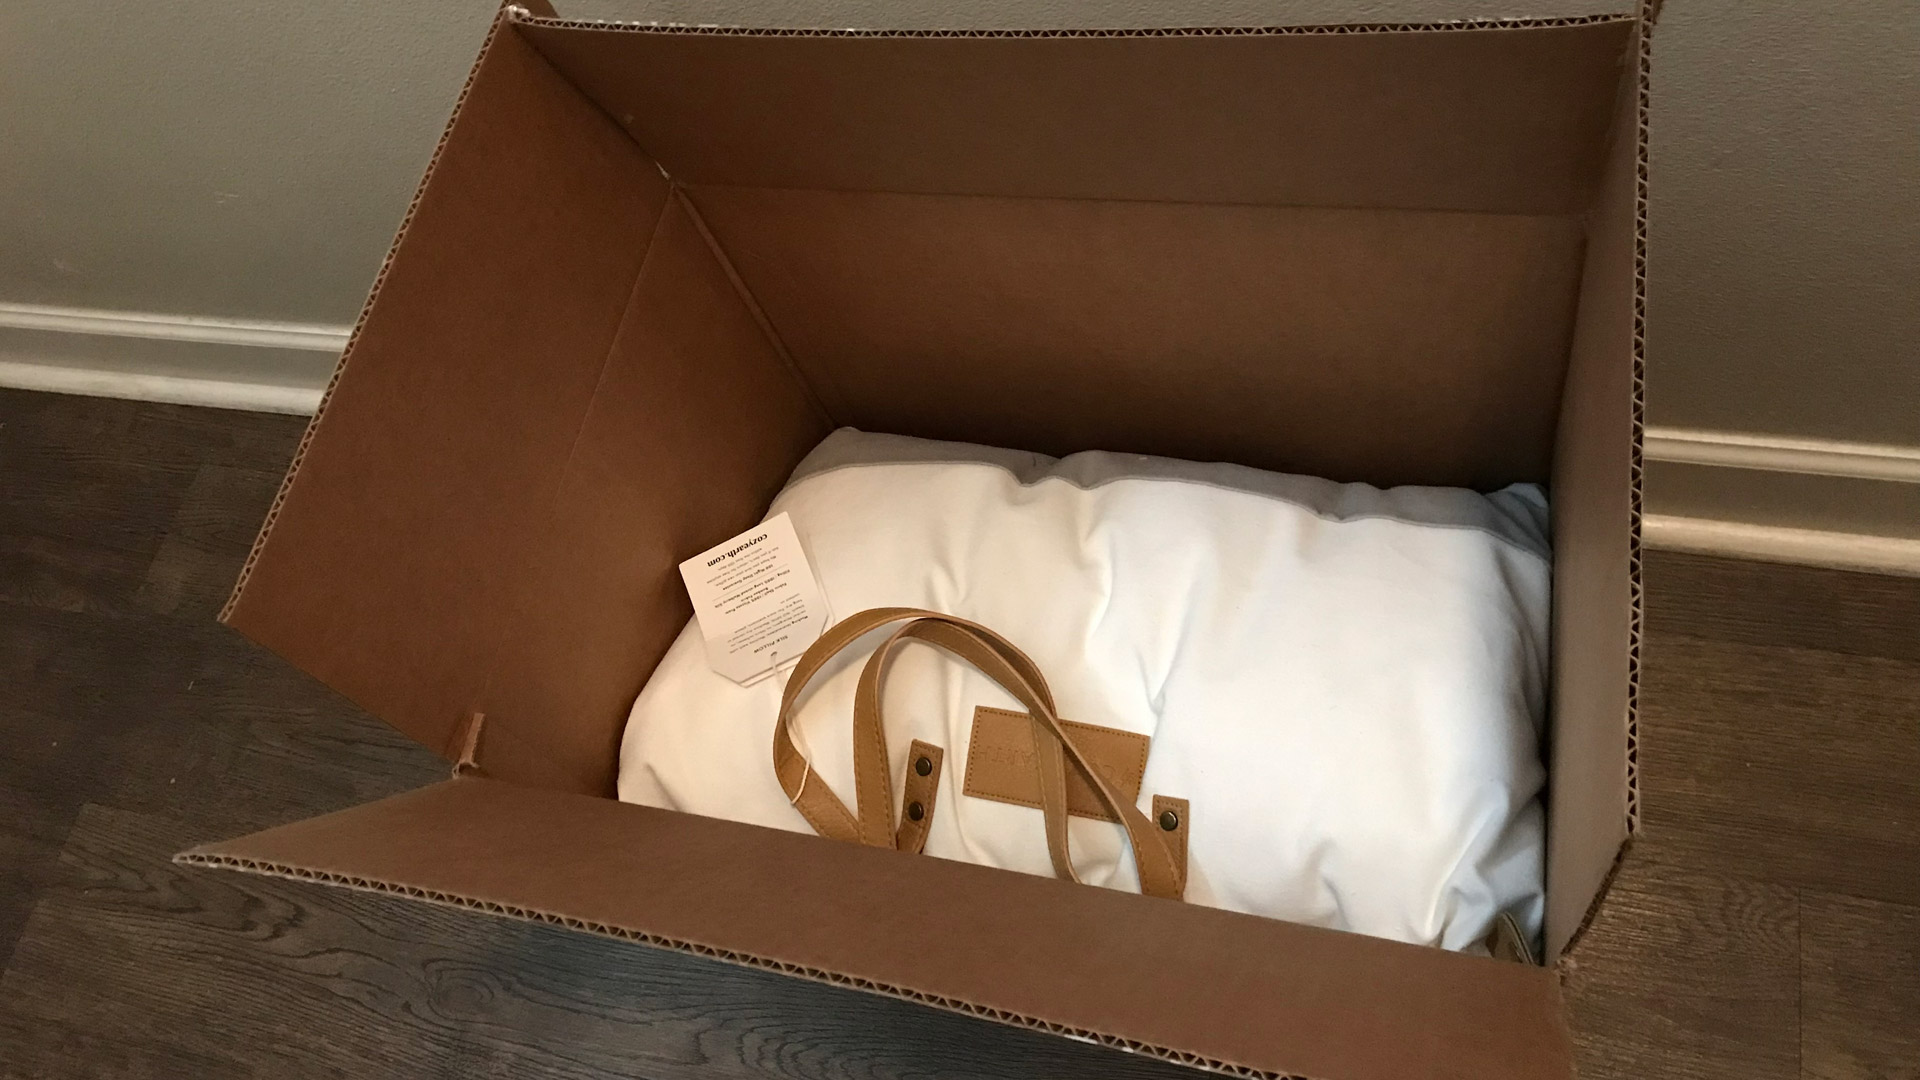 Cozy Earth Silk Pillows in their shipping box